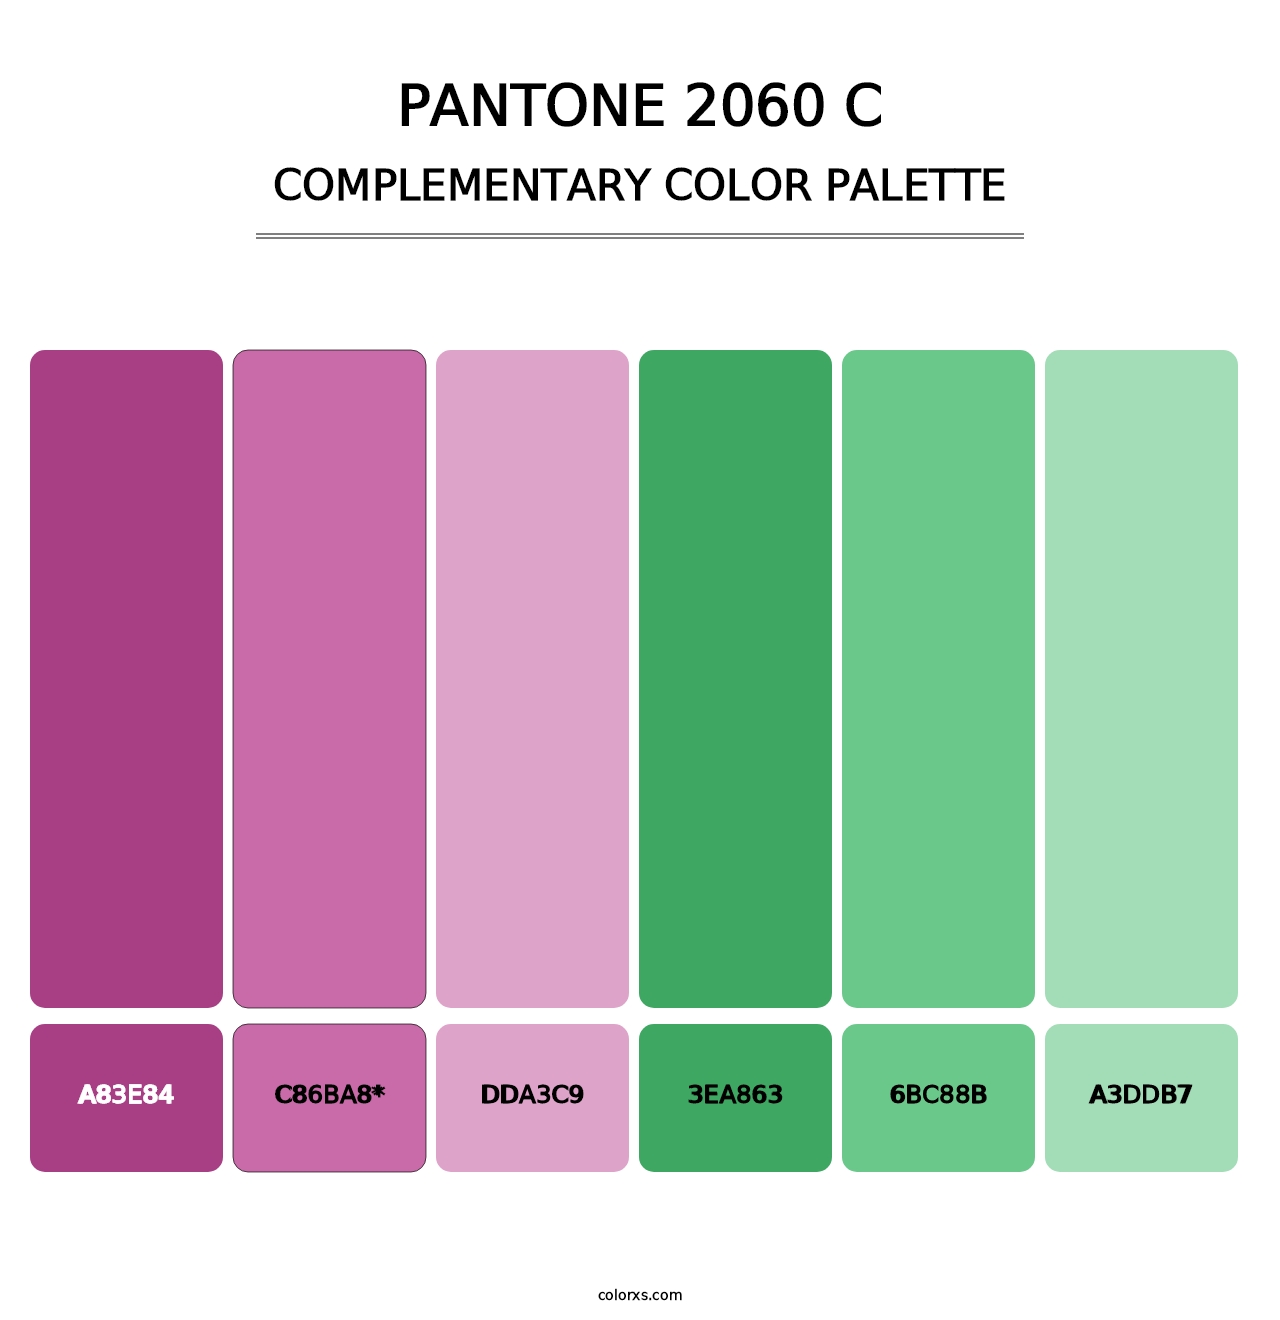 PANTONE 2060 C - Complementary Color Palette